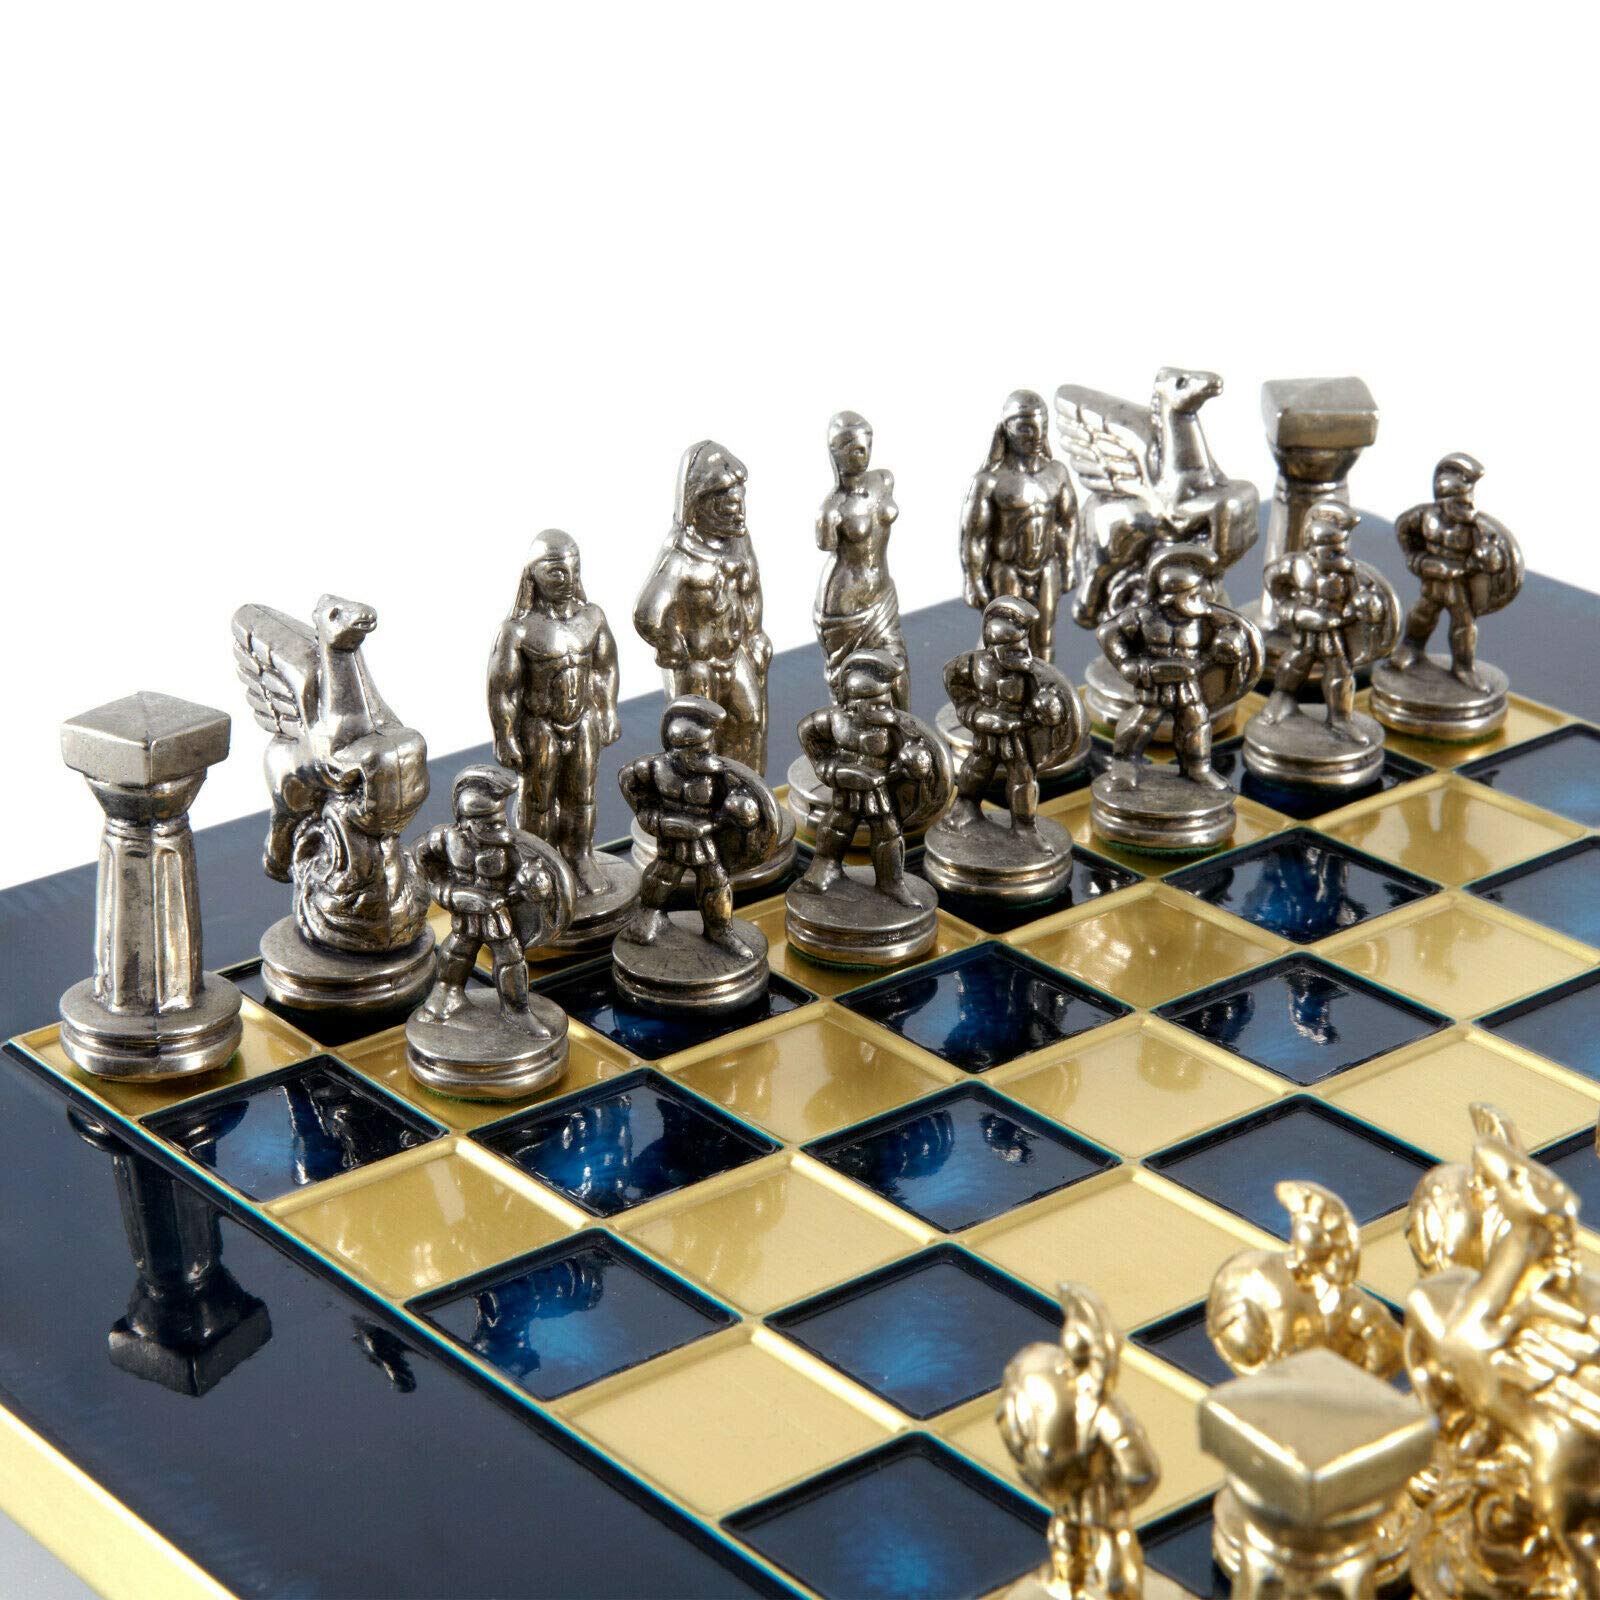 Manopoulos Spartan Warriors Chess Set - Brass&Nickel - Blue Chess Board